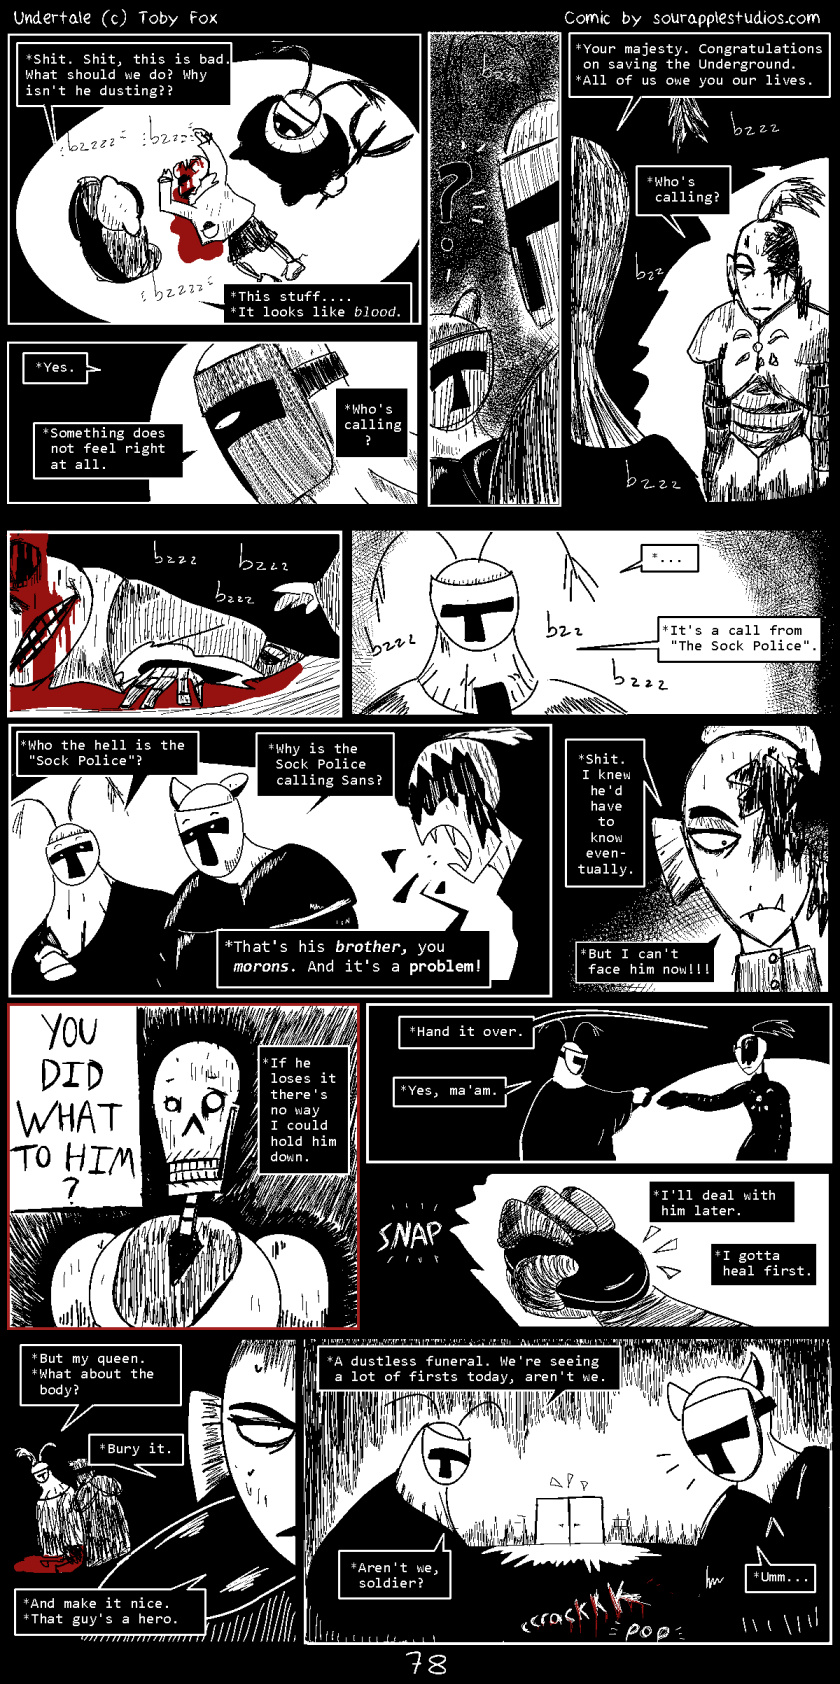 Horrortale capitulo 1 pagina 1 by pacmanilluminati on DeviantArt